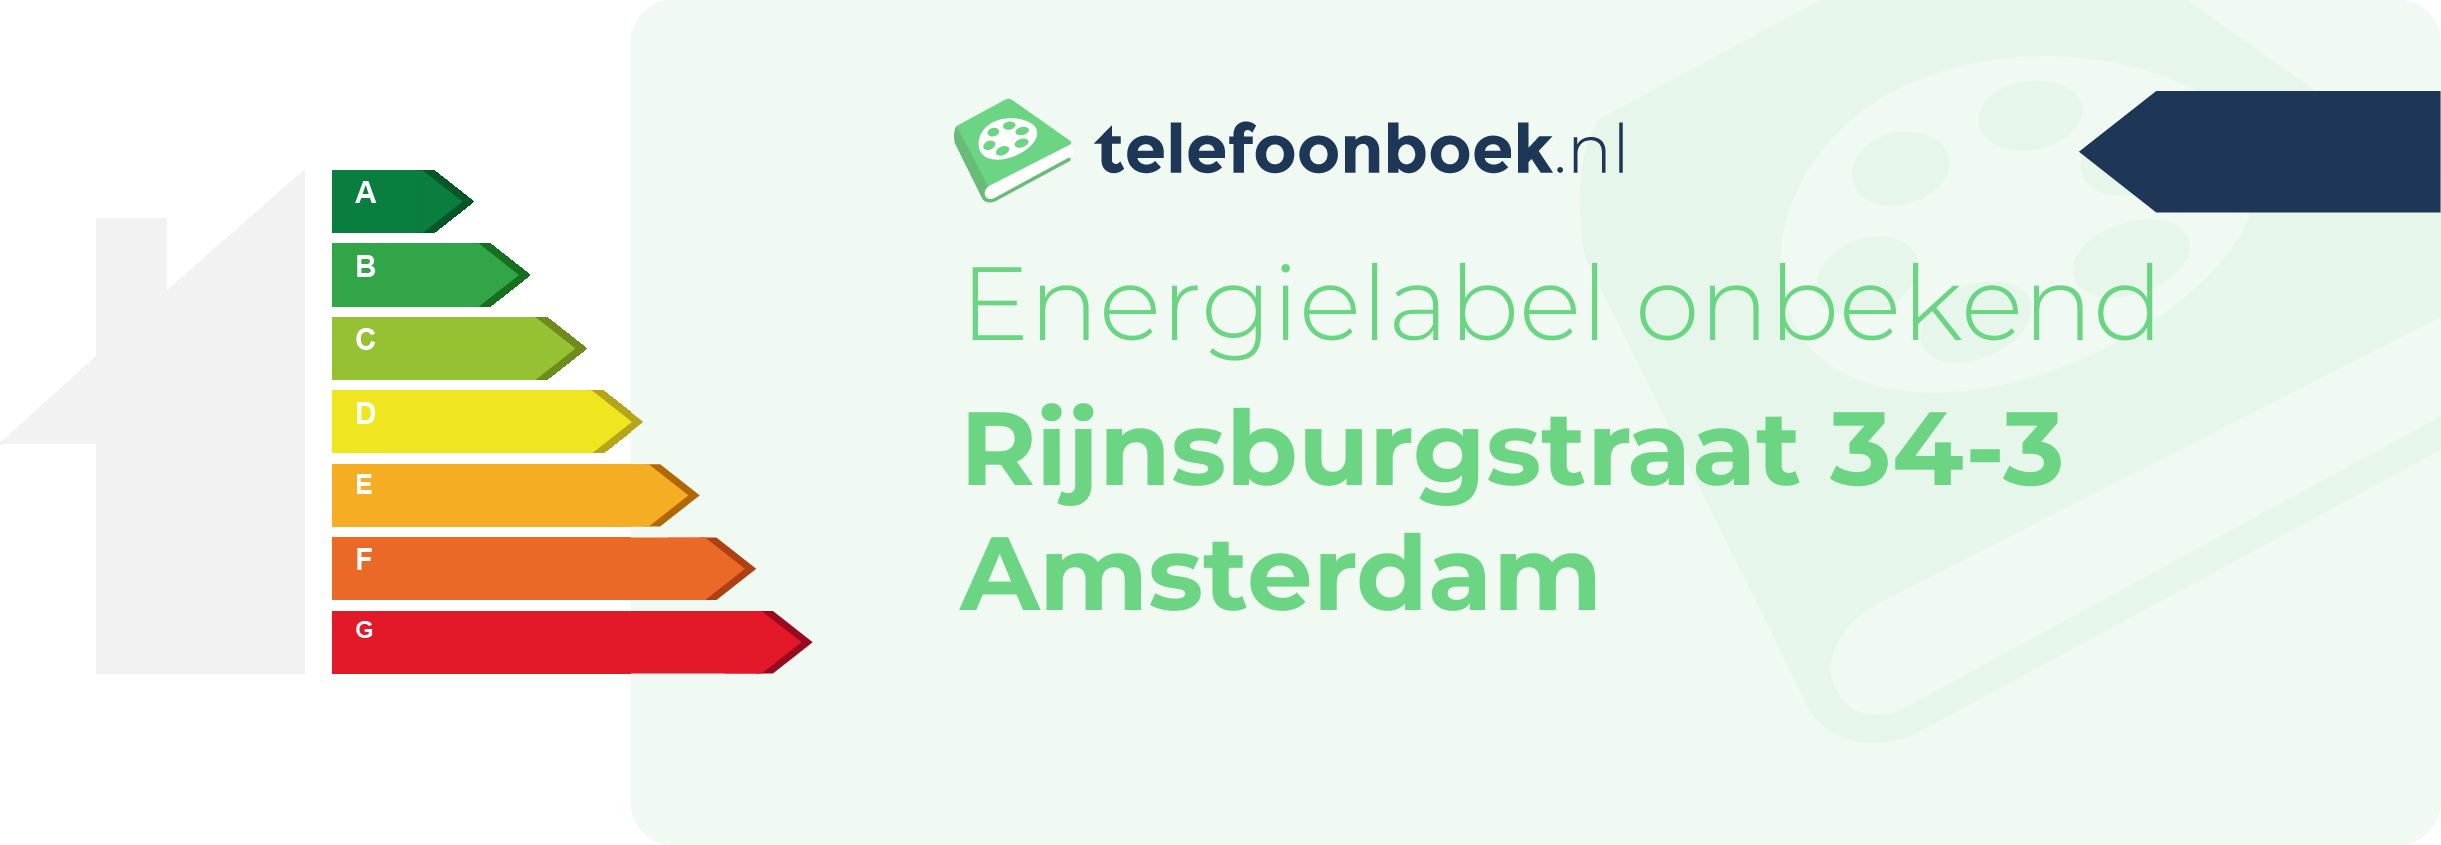 Energielabel Rijnsburgstraat 34-3 Amsterdam